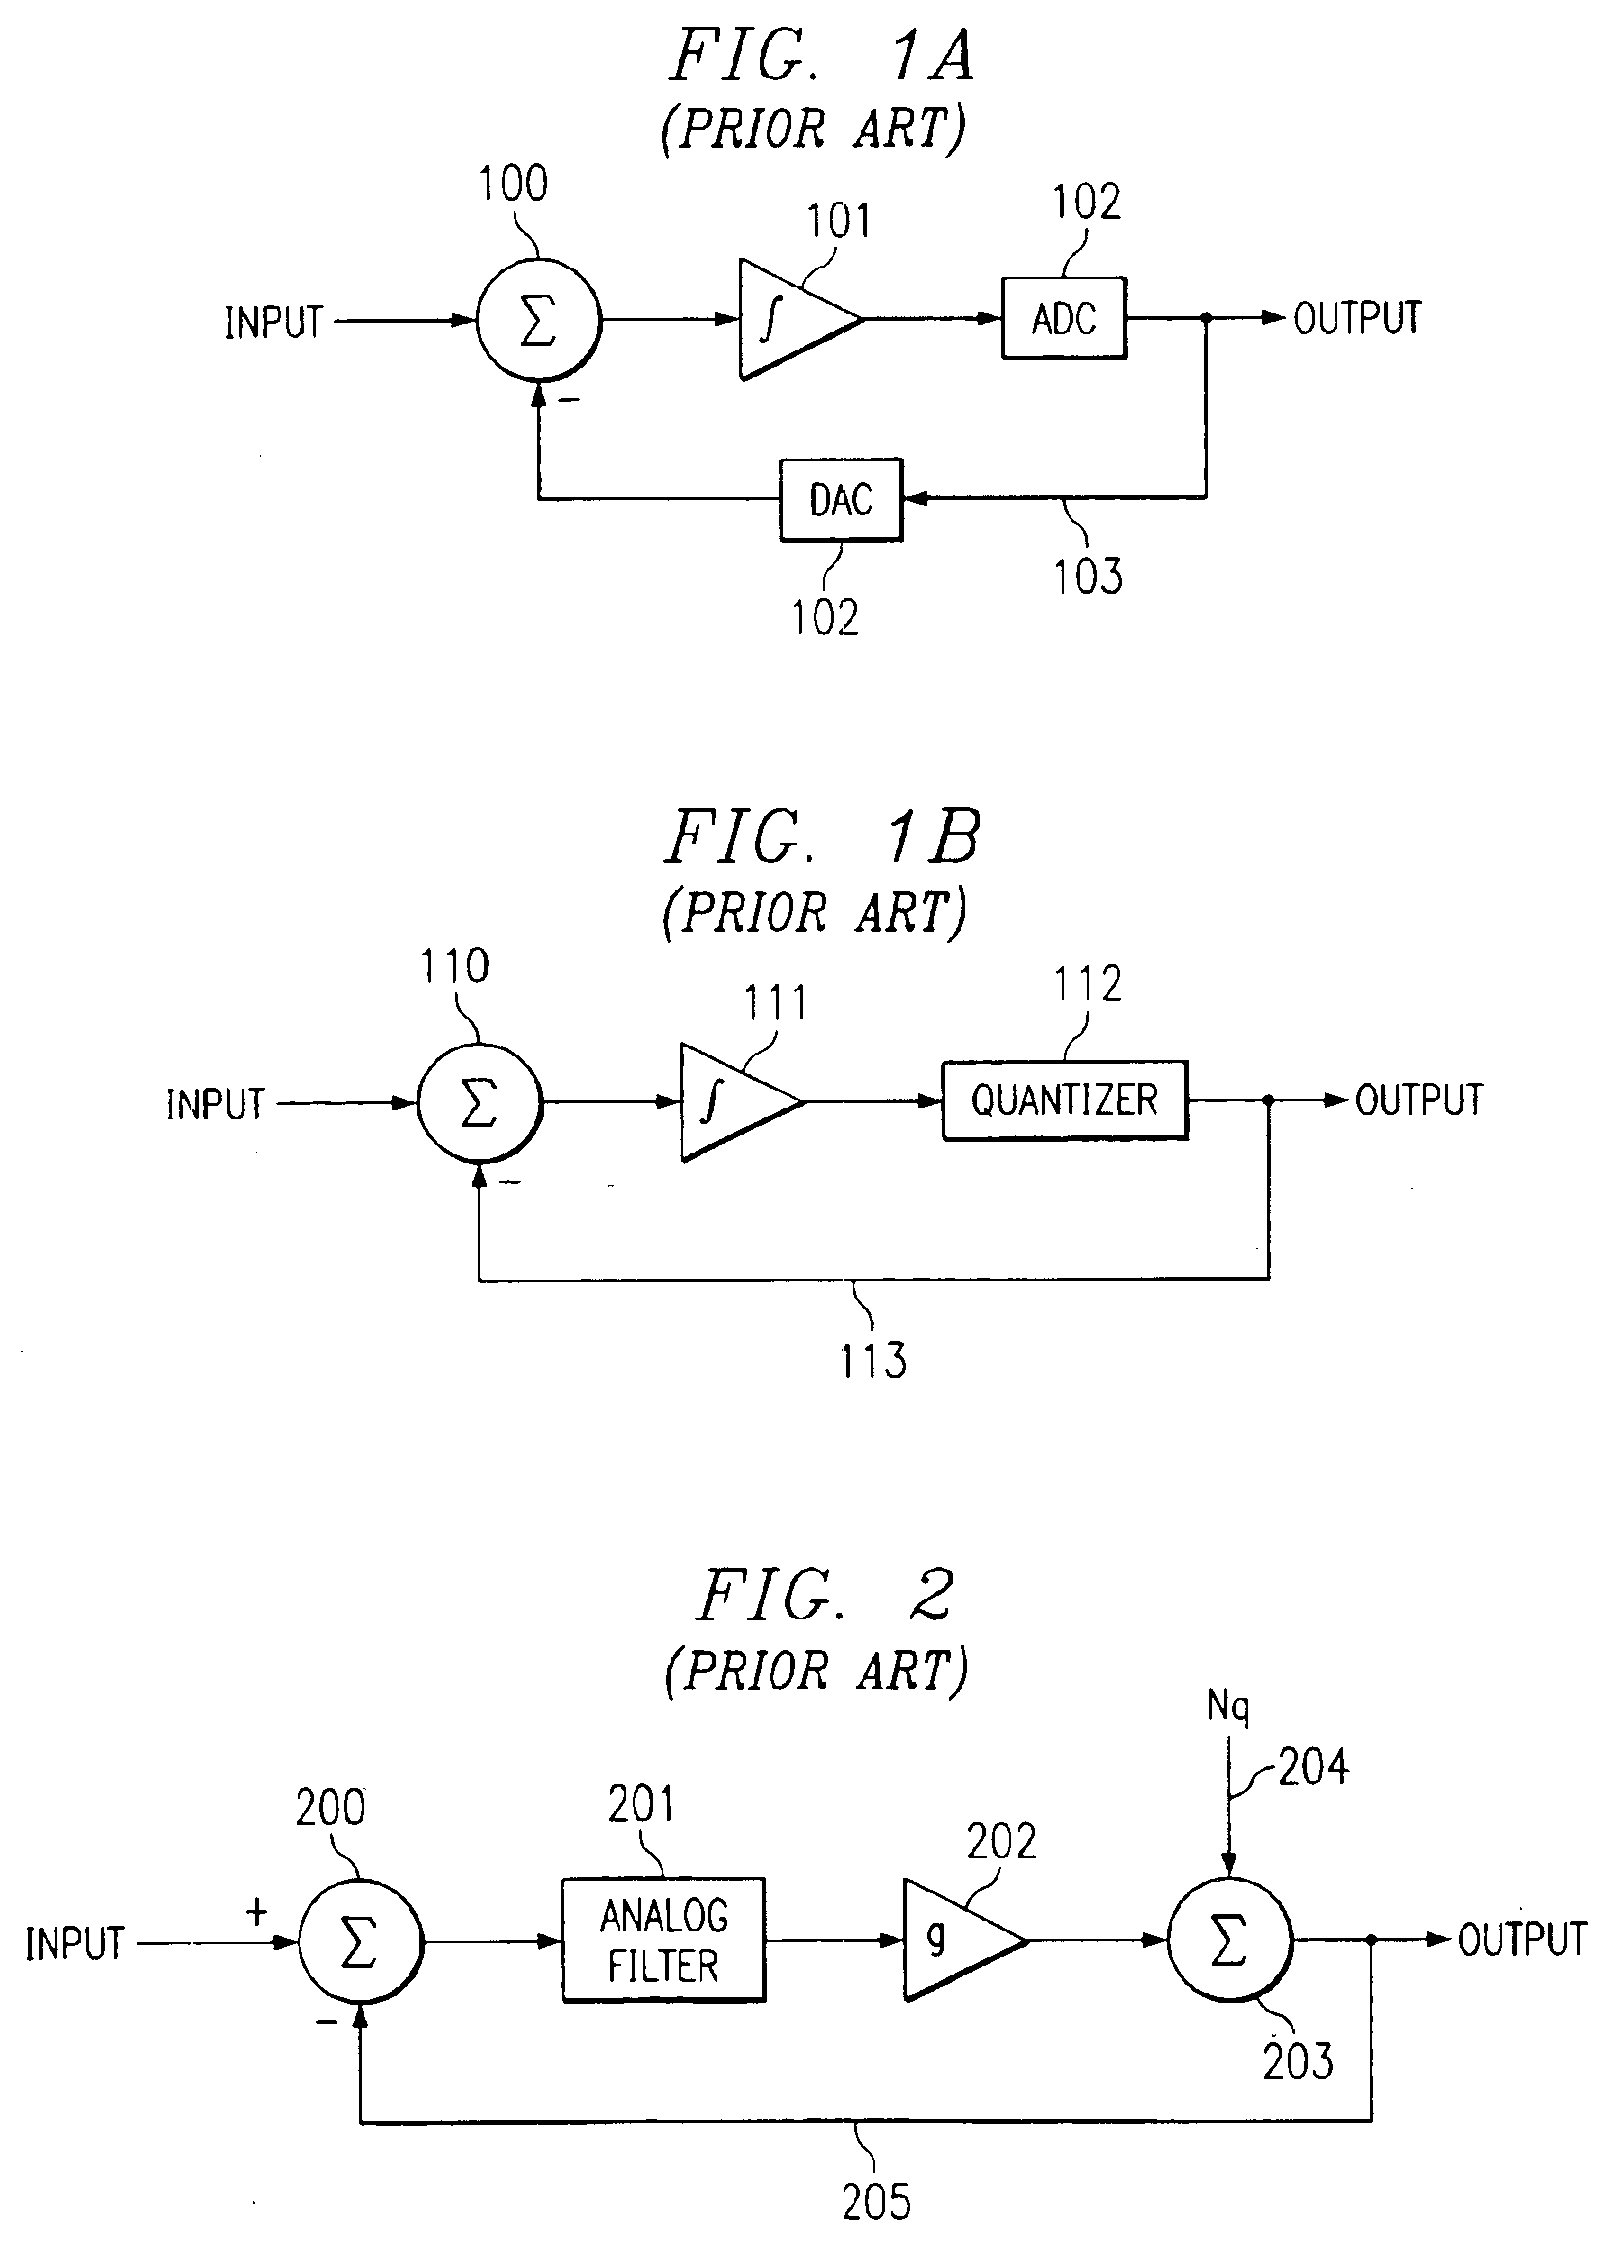 Delta-sigma modulator system and method